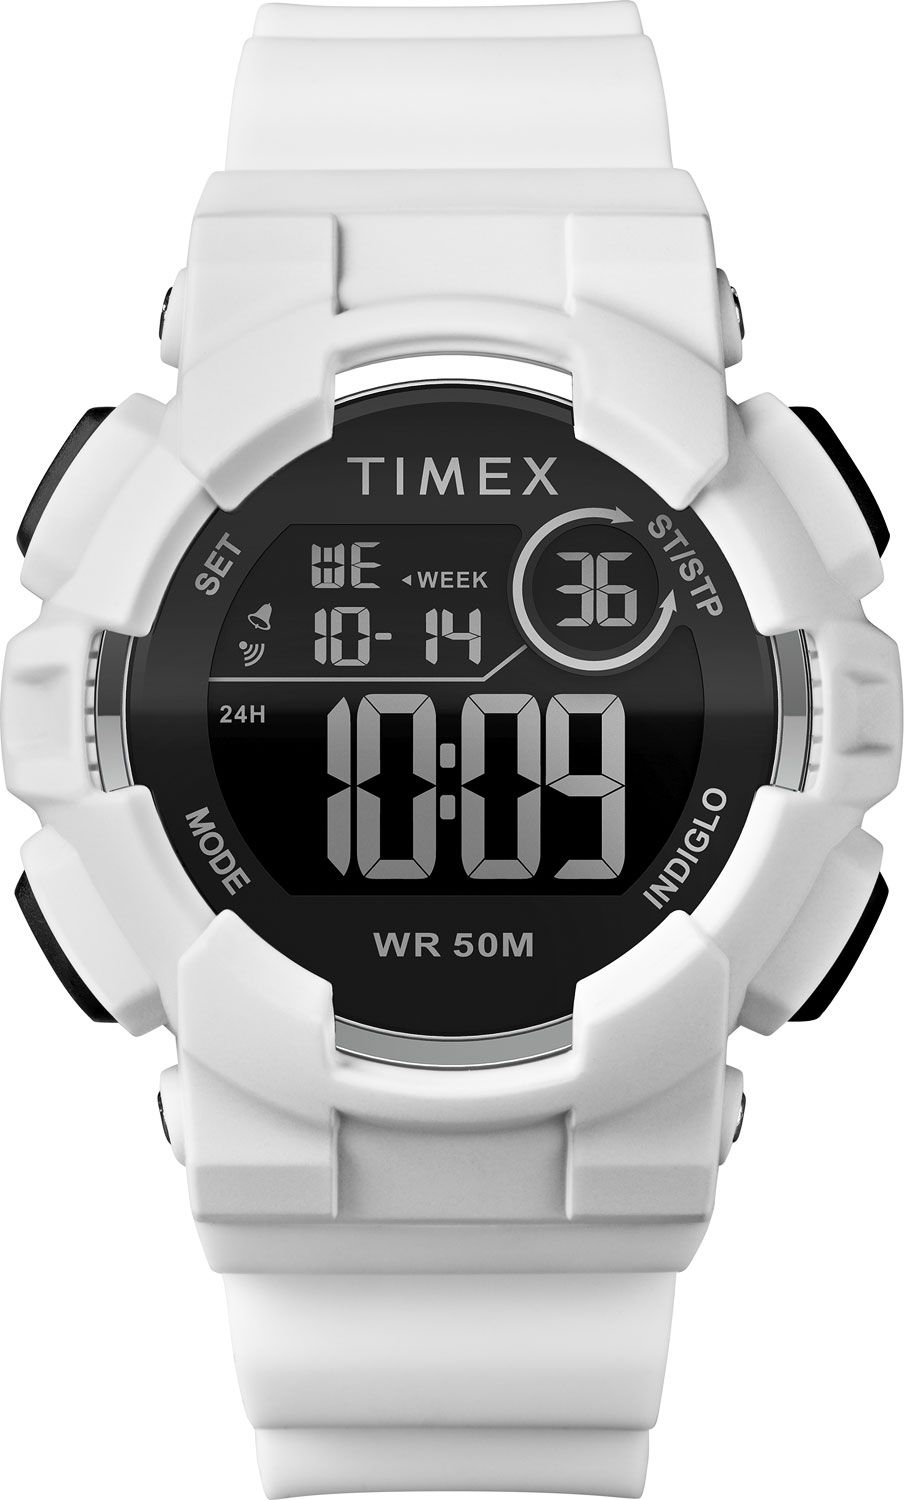   Timex TW5M23700RM  